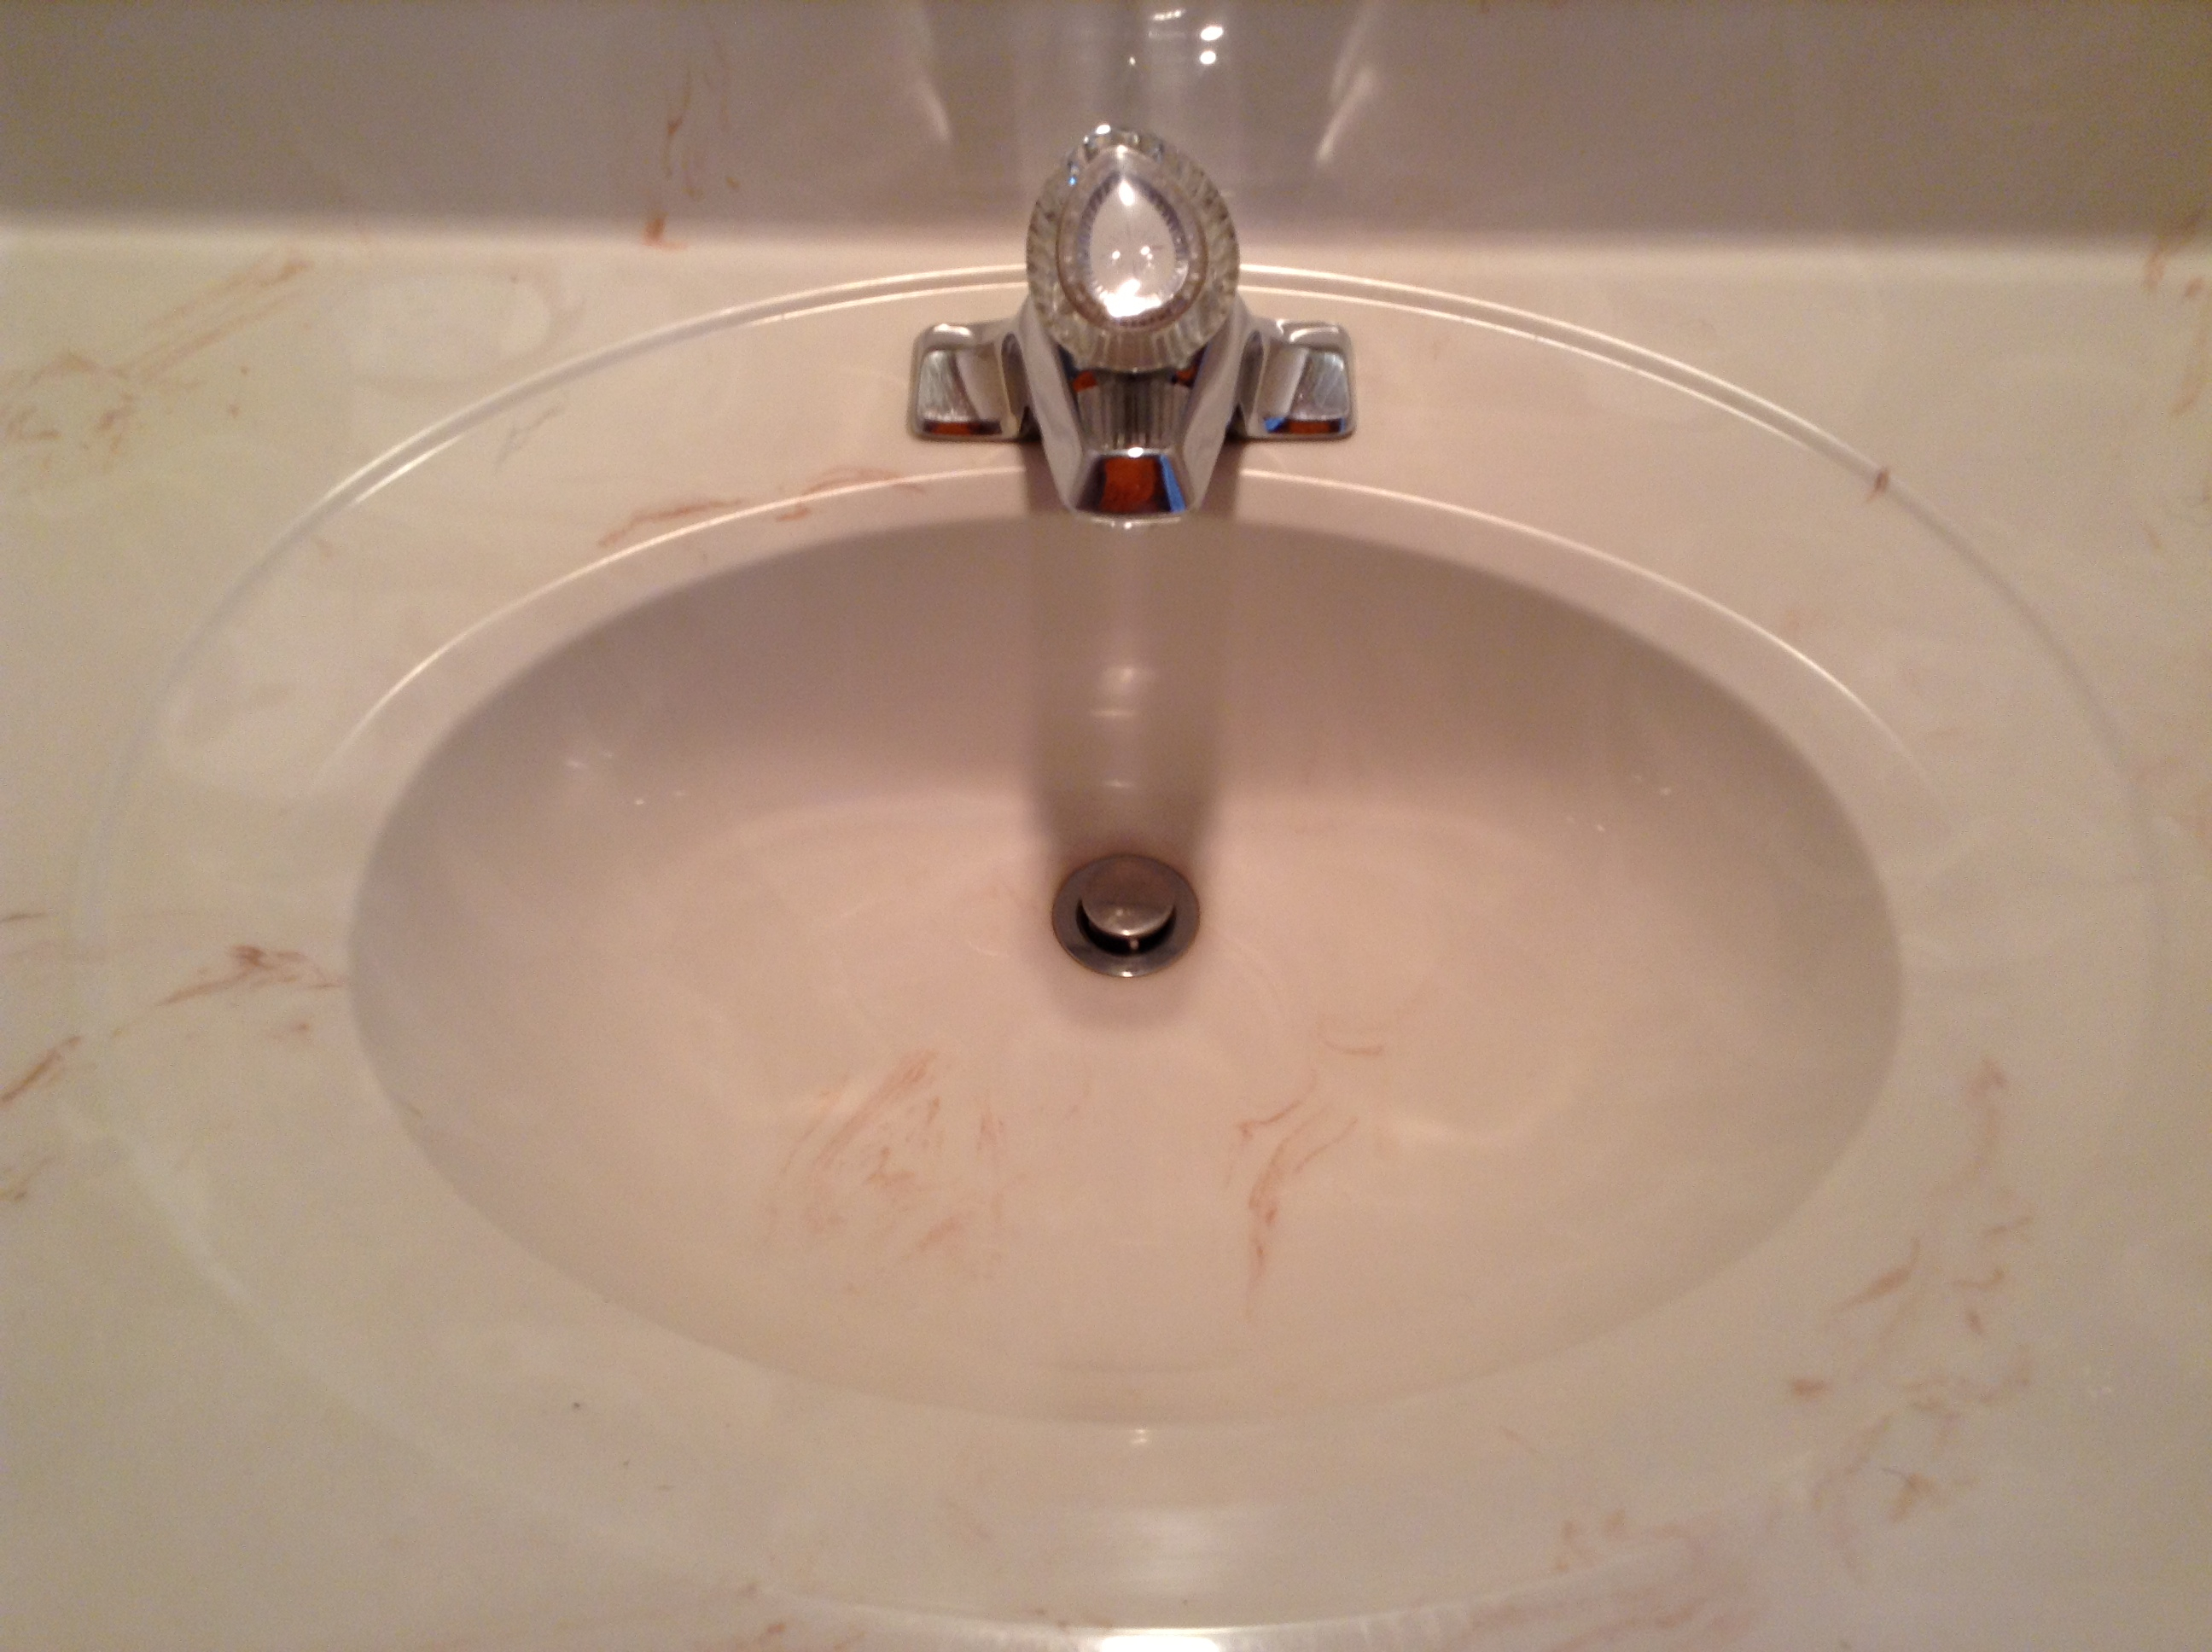 bacteria in the bathroom sink